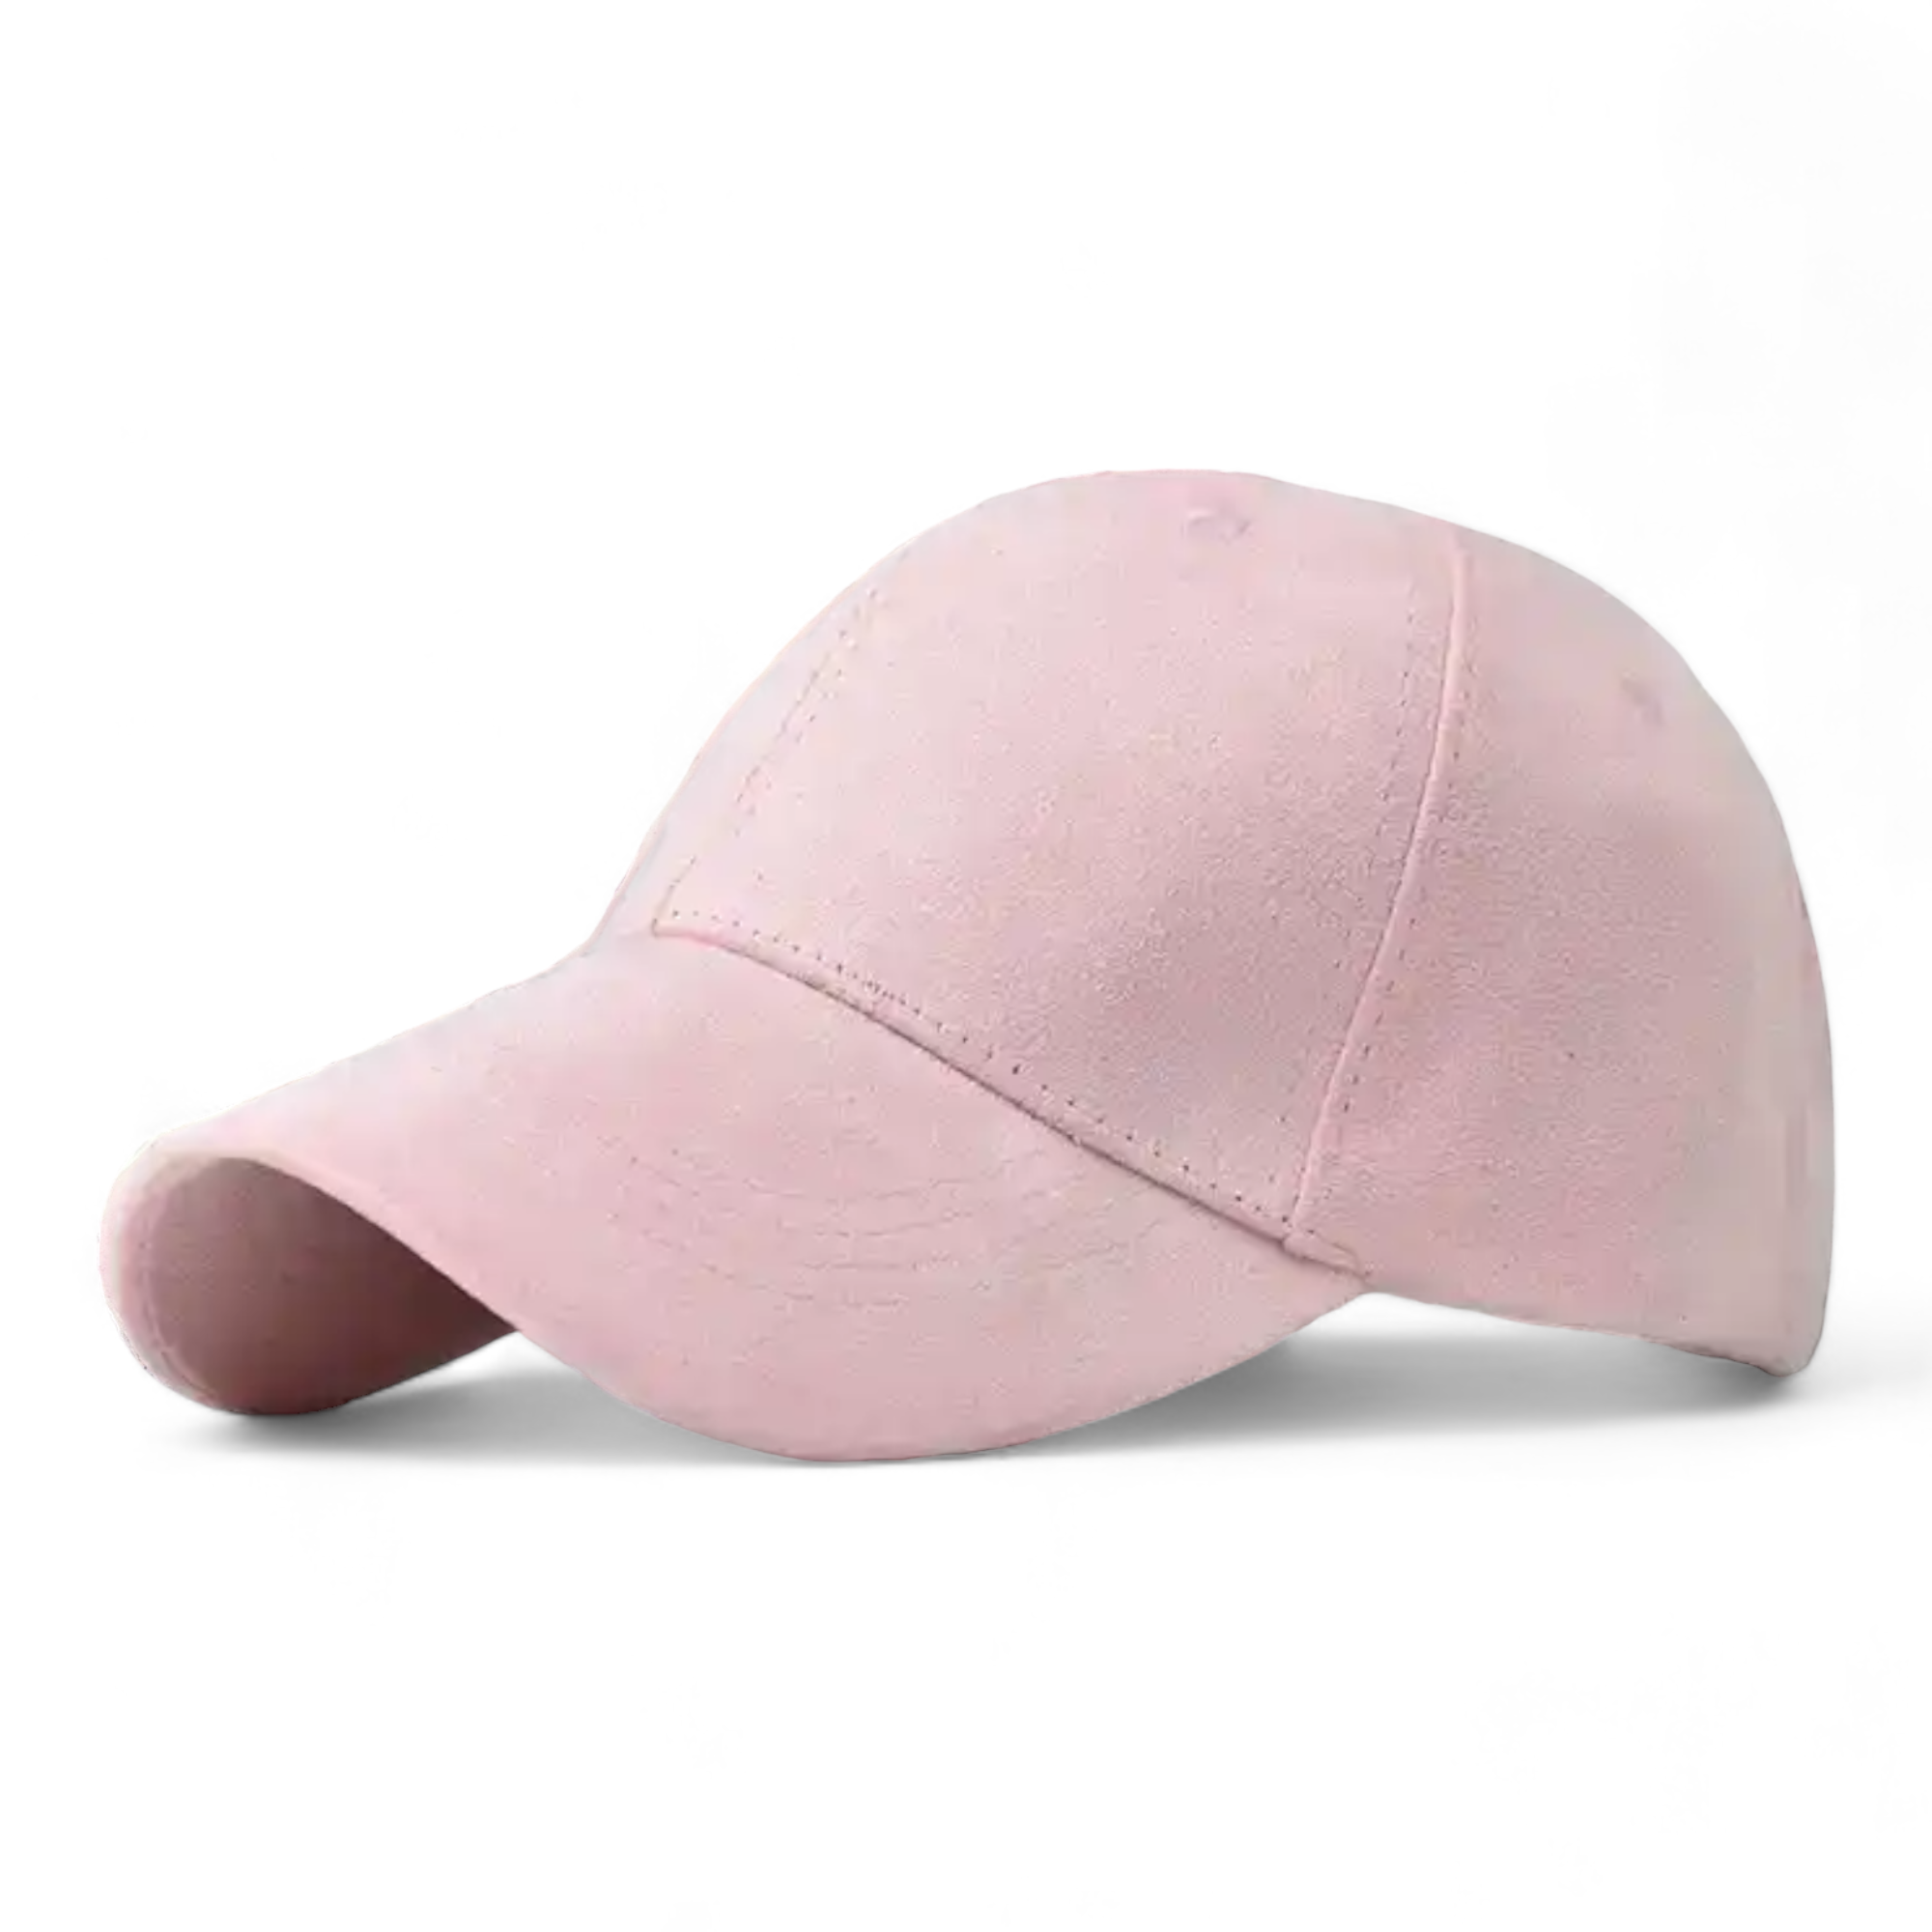 Chokore Structured Suede Baseball Cap (Pink)